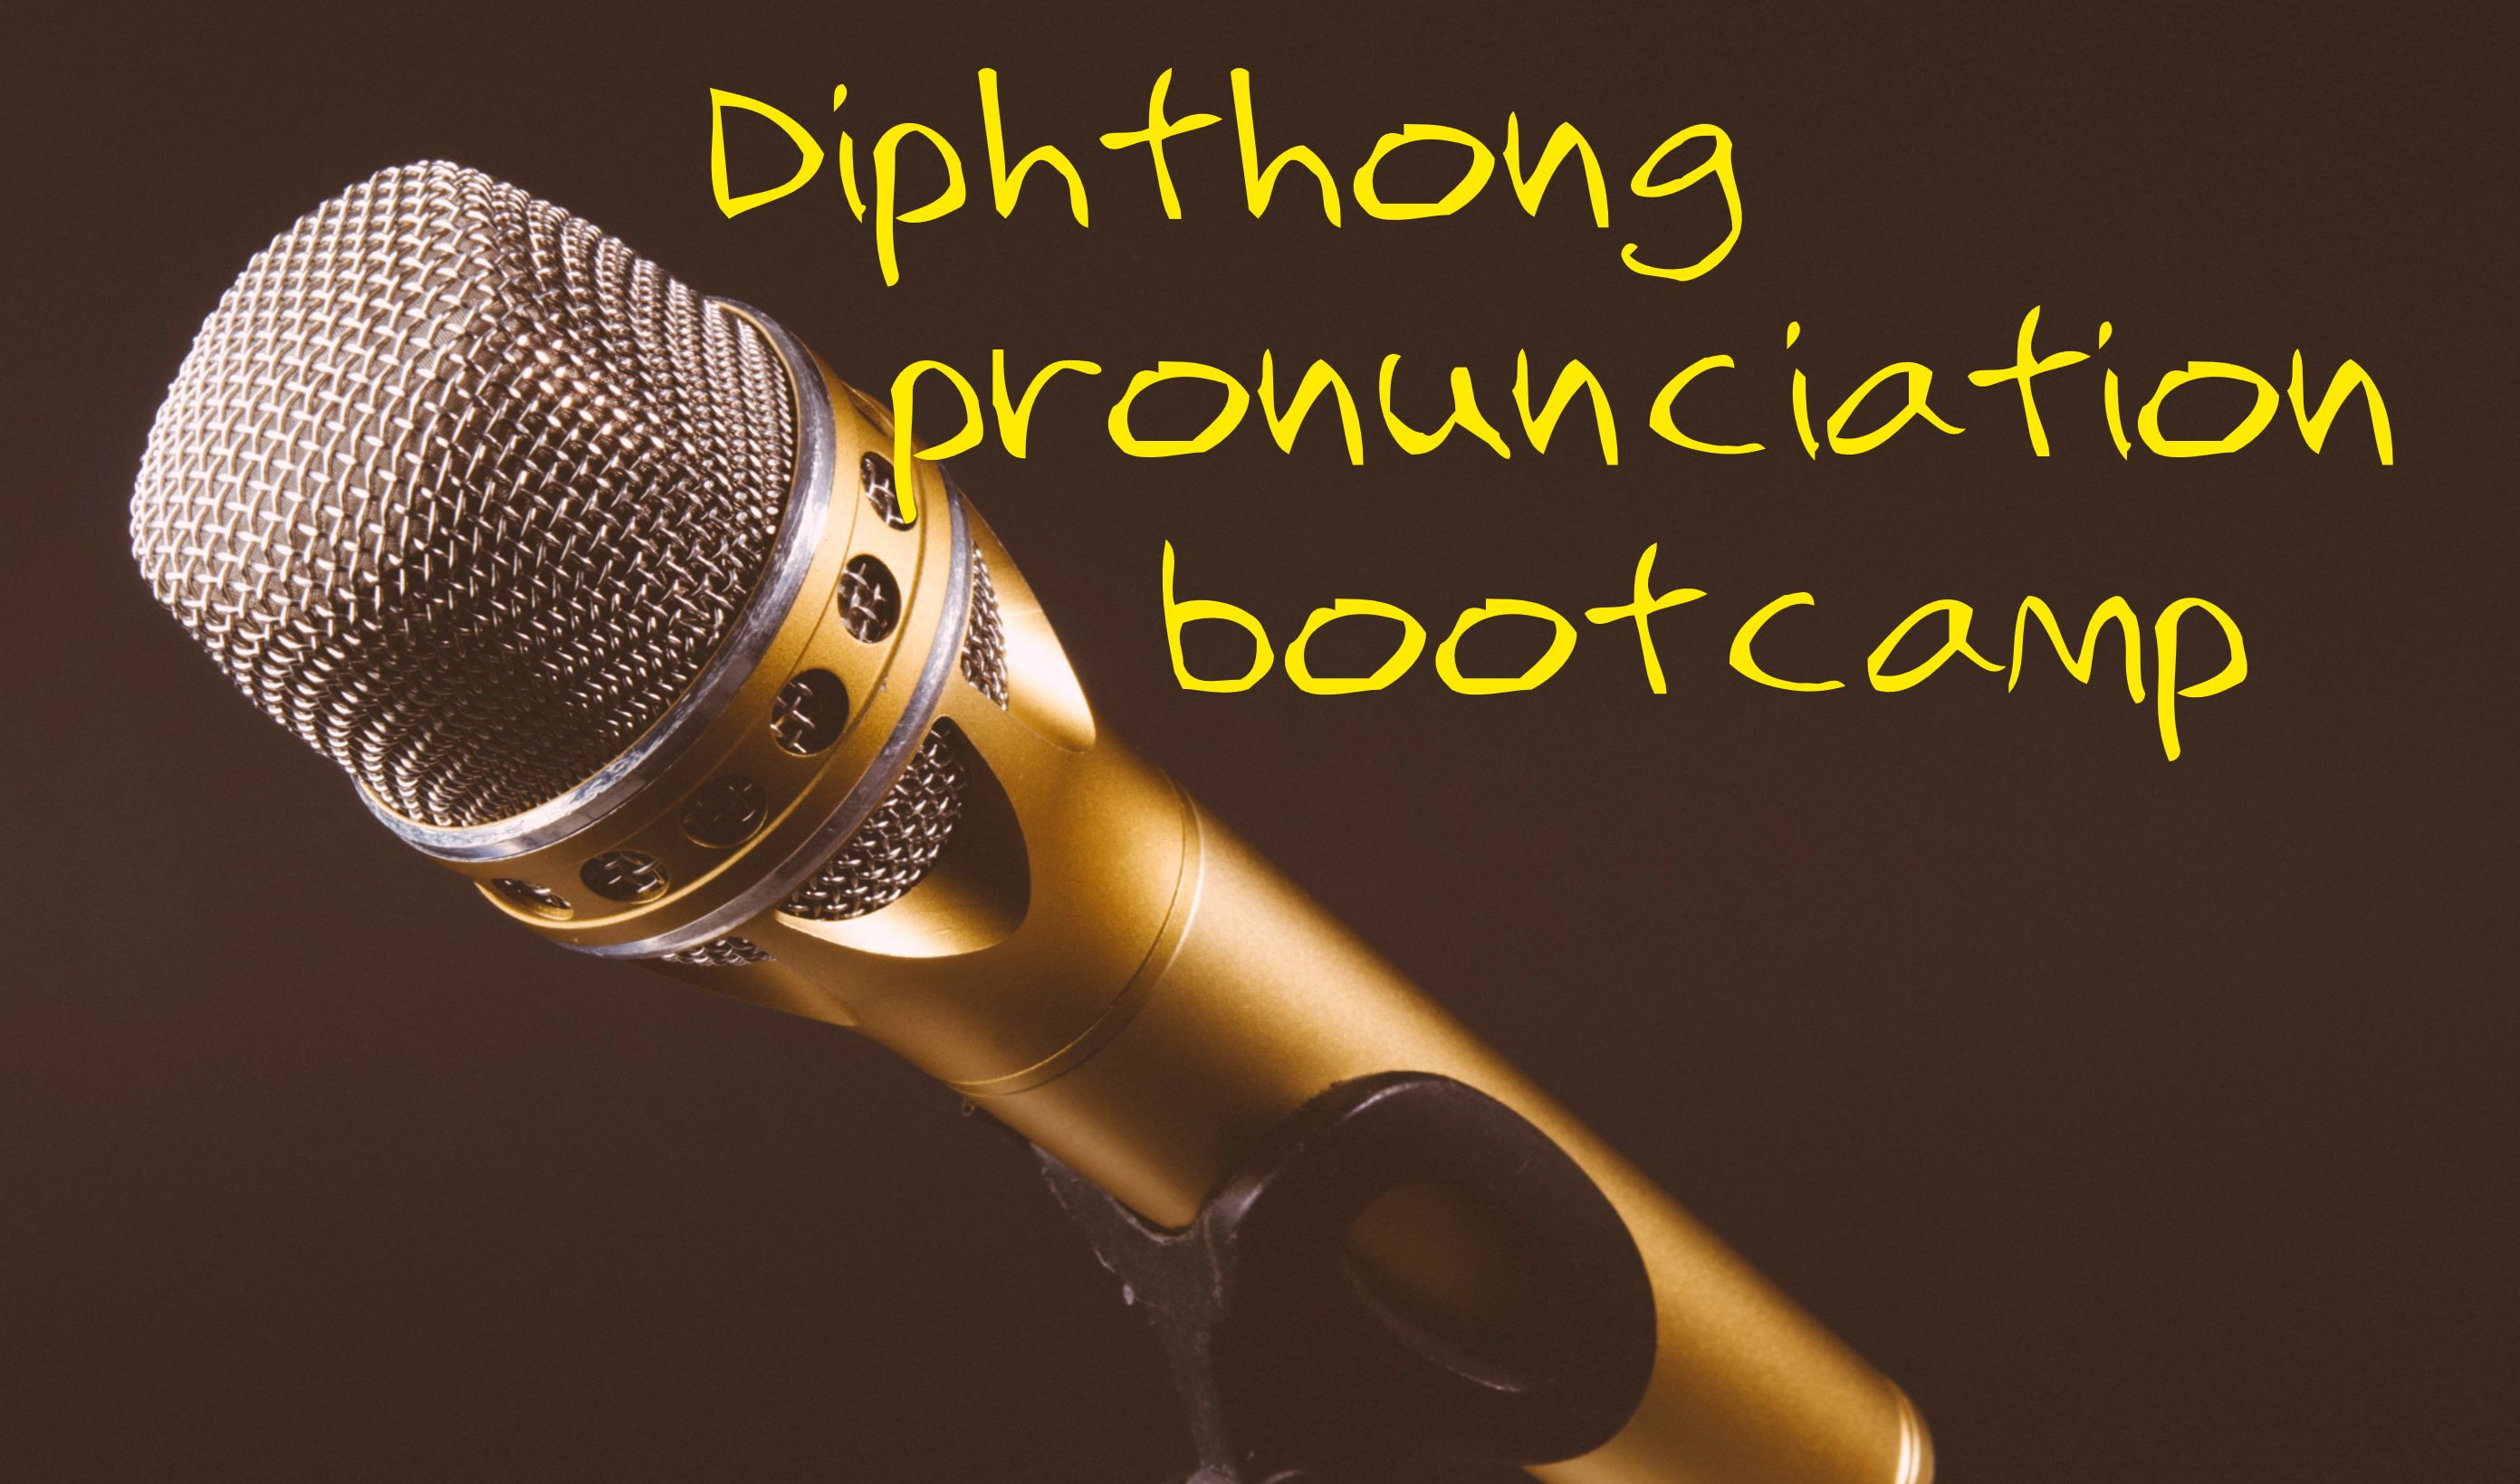 Diphthong pronunciation bootcamp